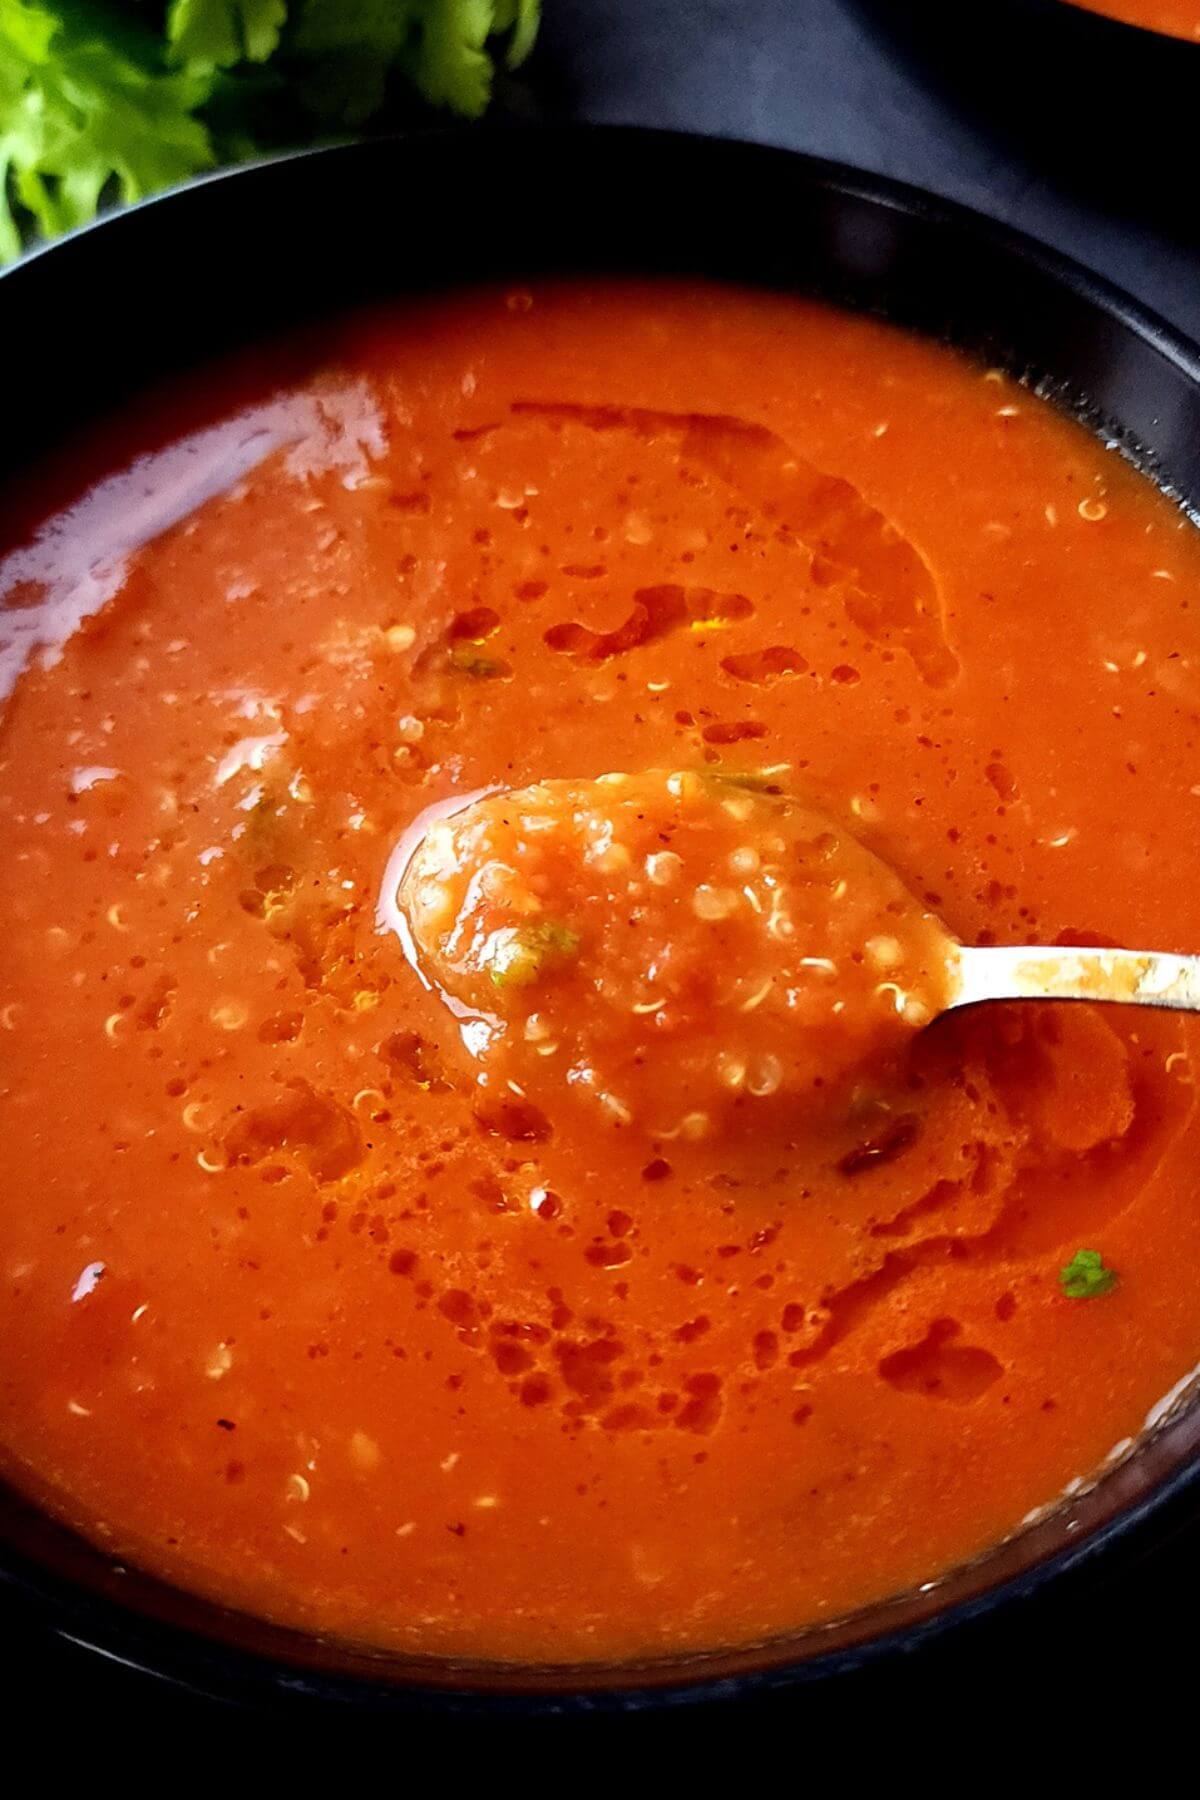 A bowl of tomato quinoa soup with a spoon.